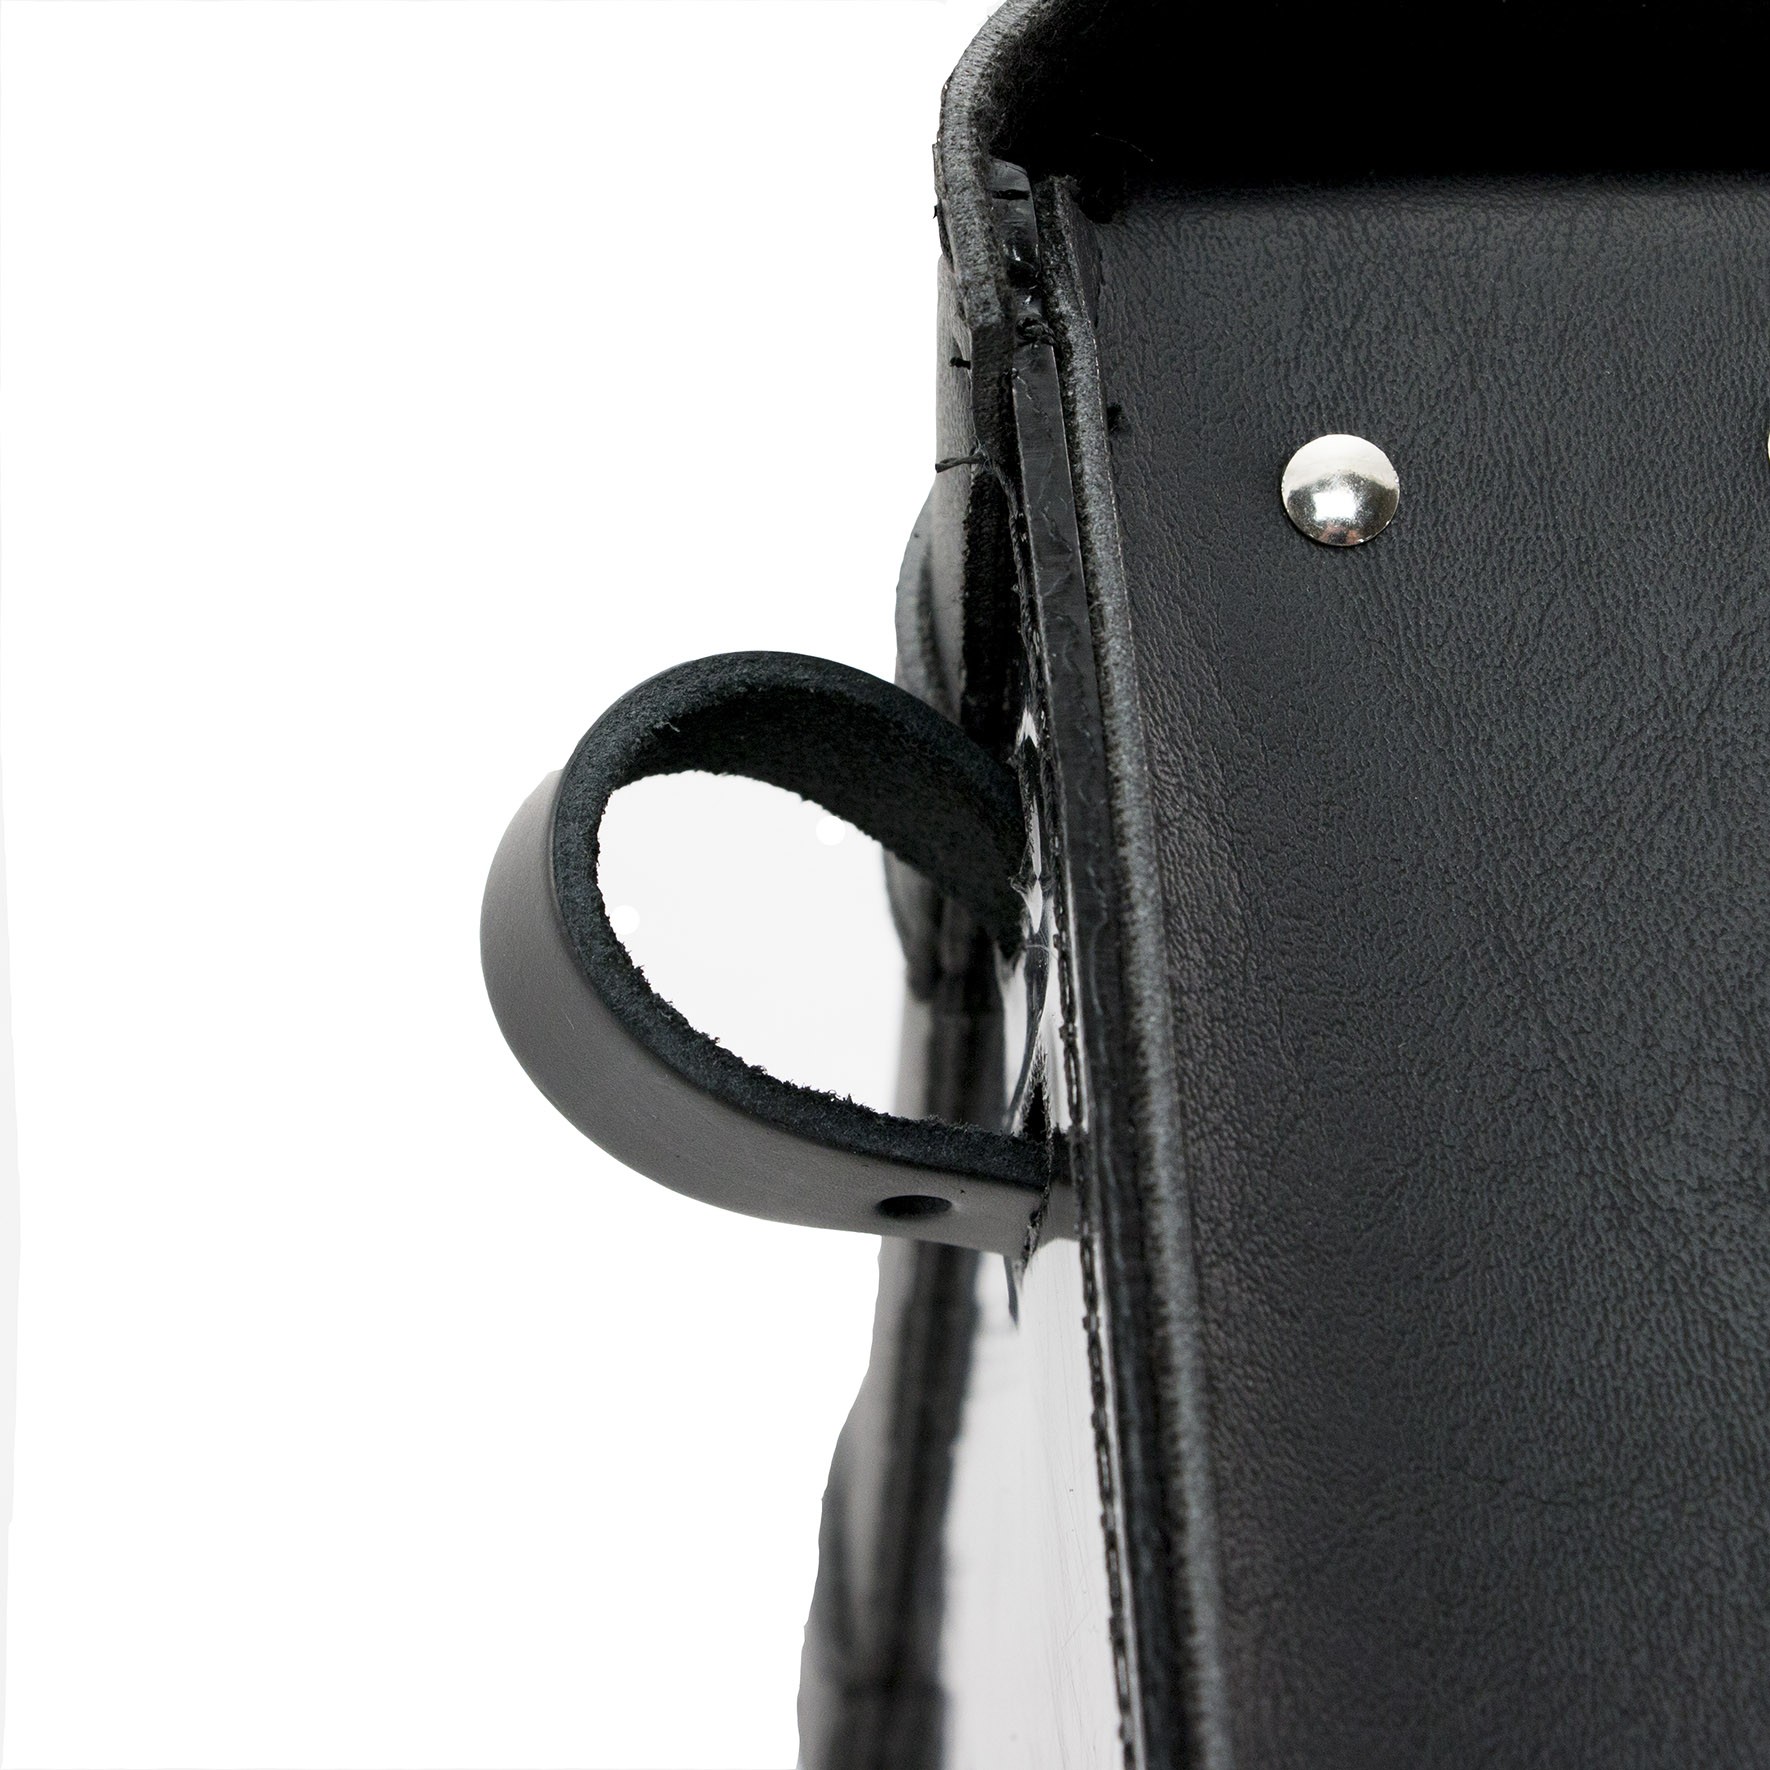 Dowco Swingarm Bag 10.5 x 11.5 x 4.5 Black Synthetic Leather 59776-00 